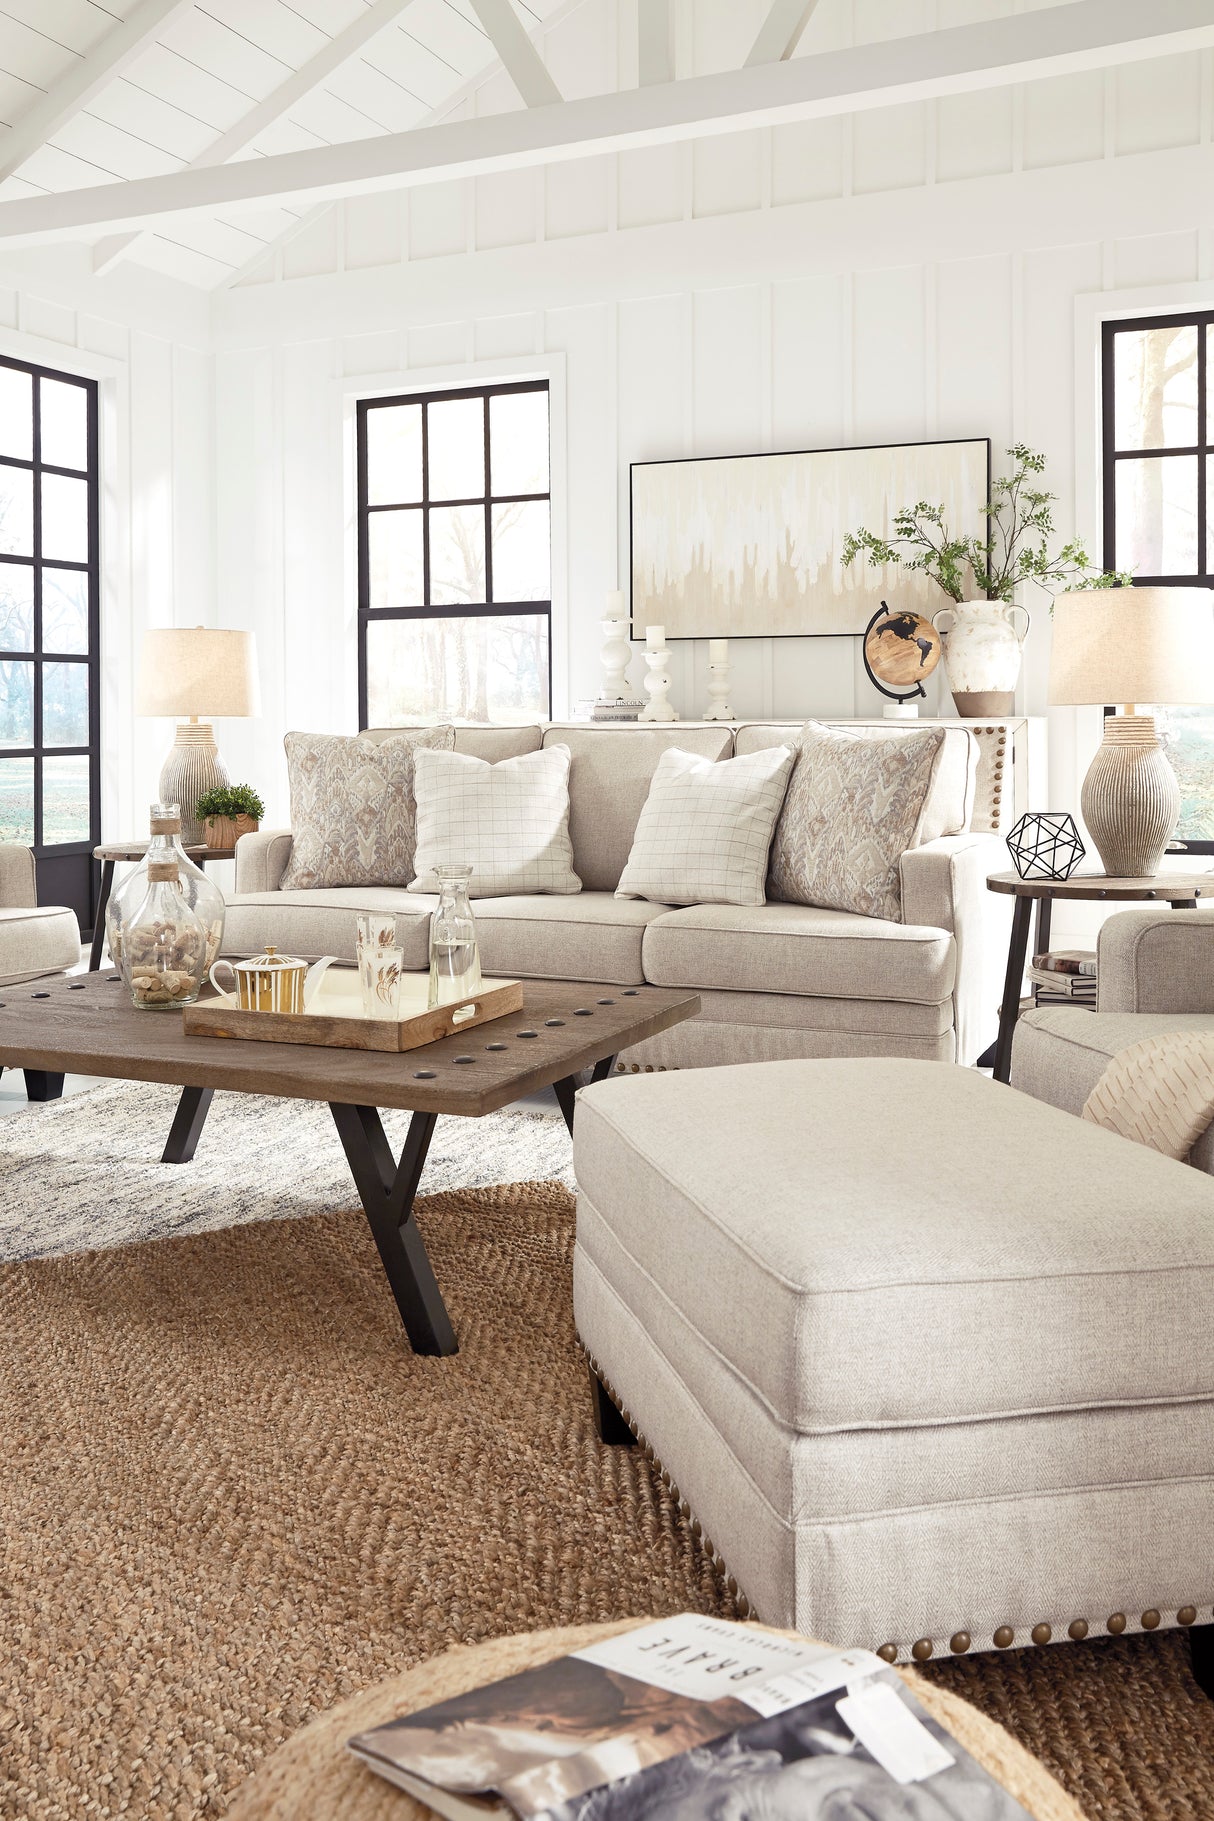 Claredon Linen Living Room Set - Luna Furniture